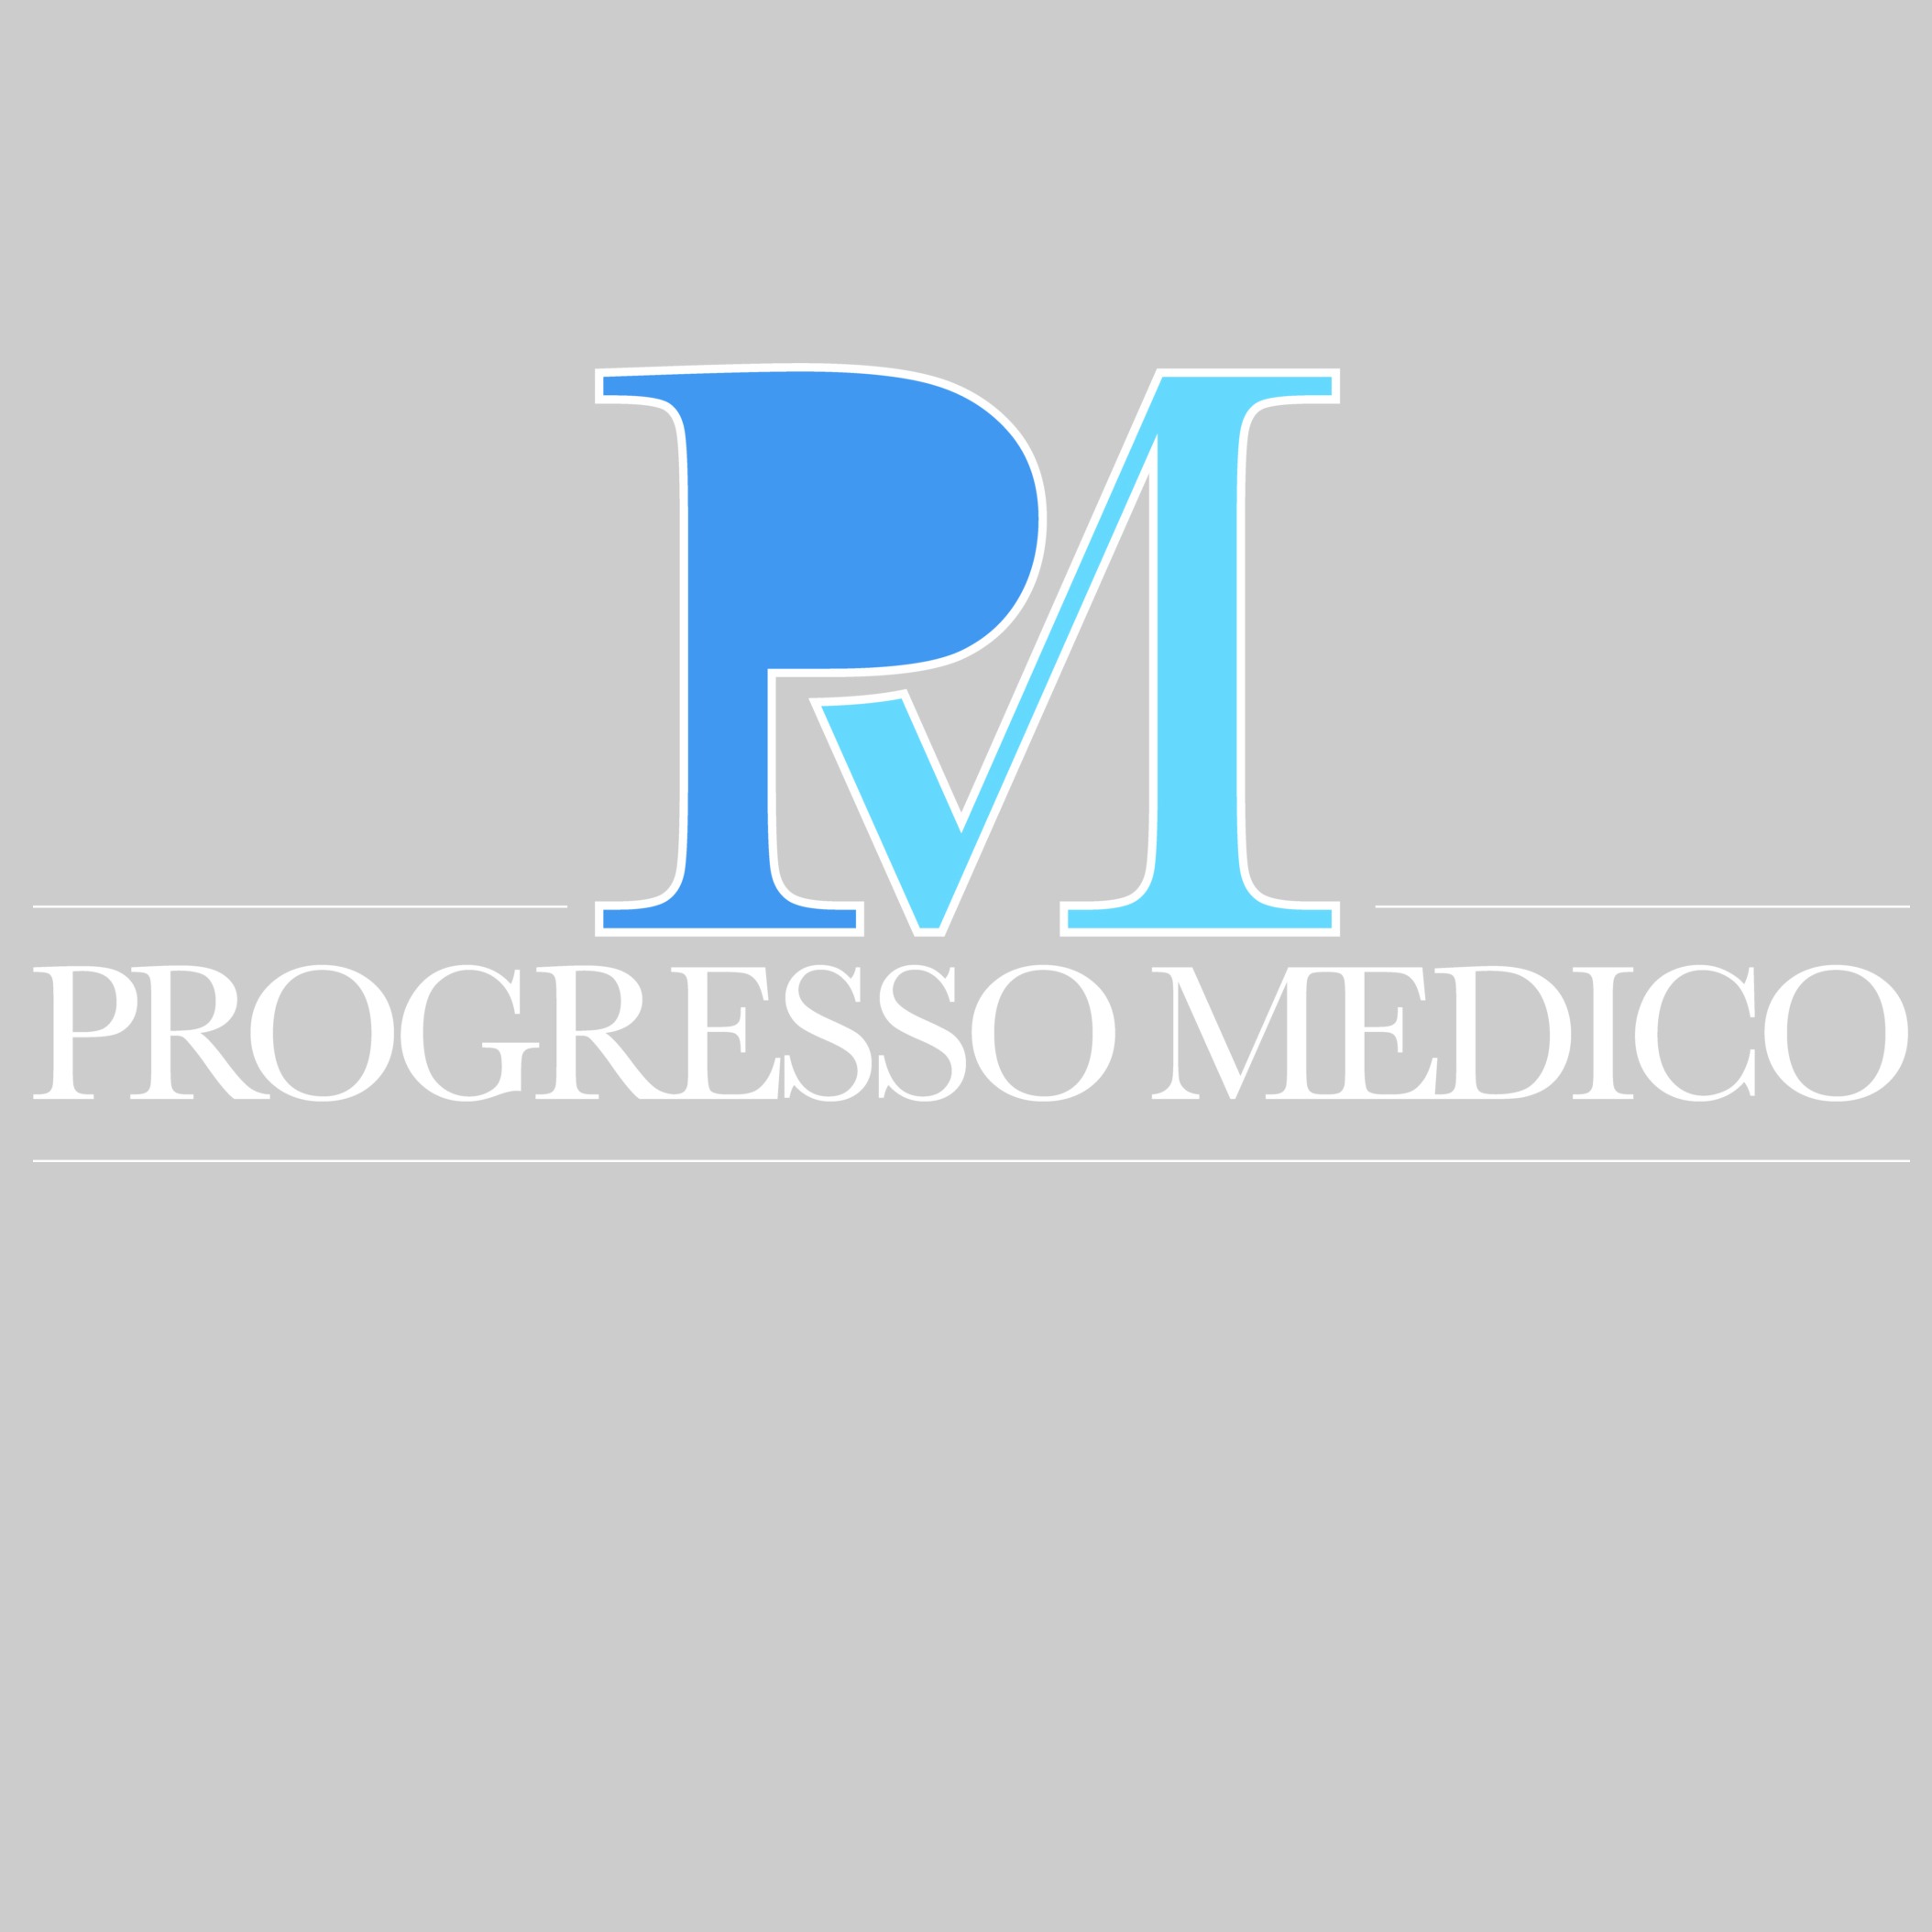 Progresso Medico